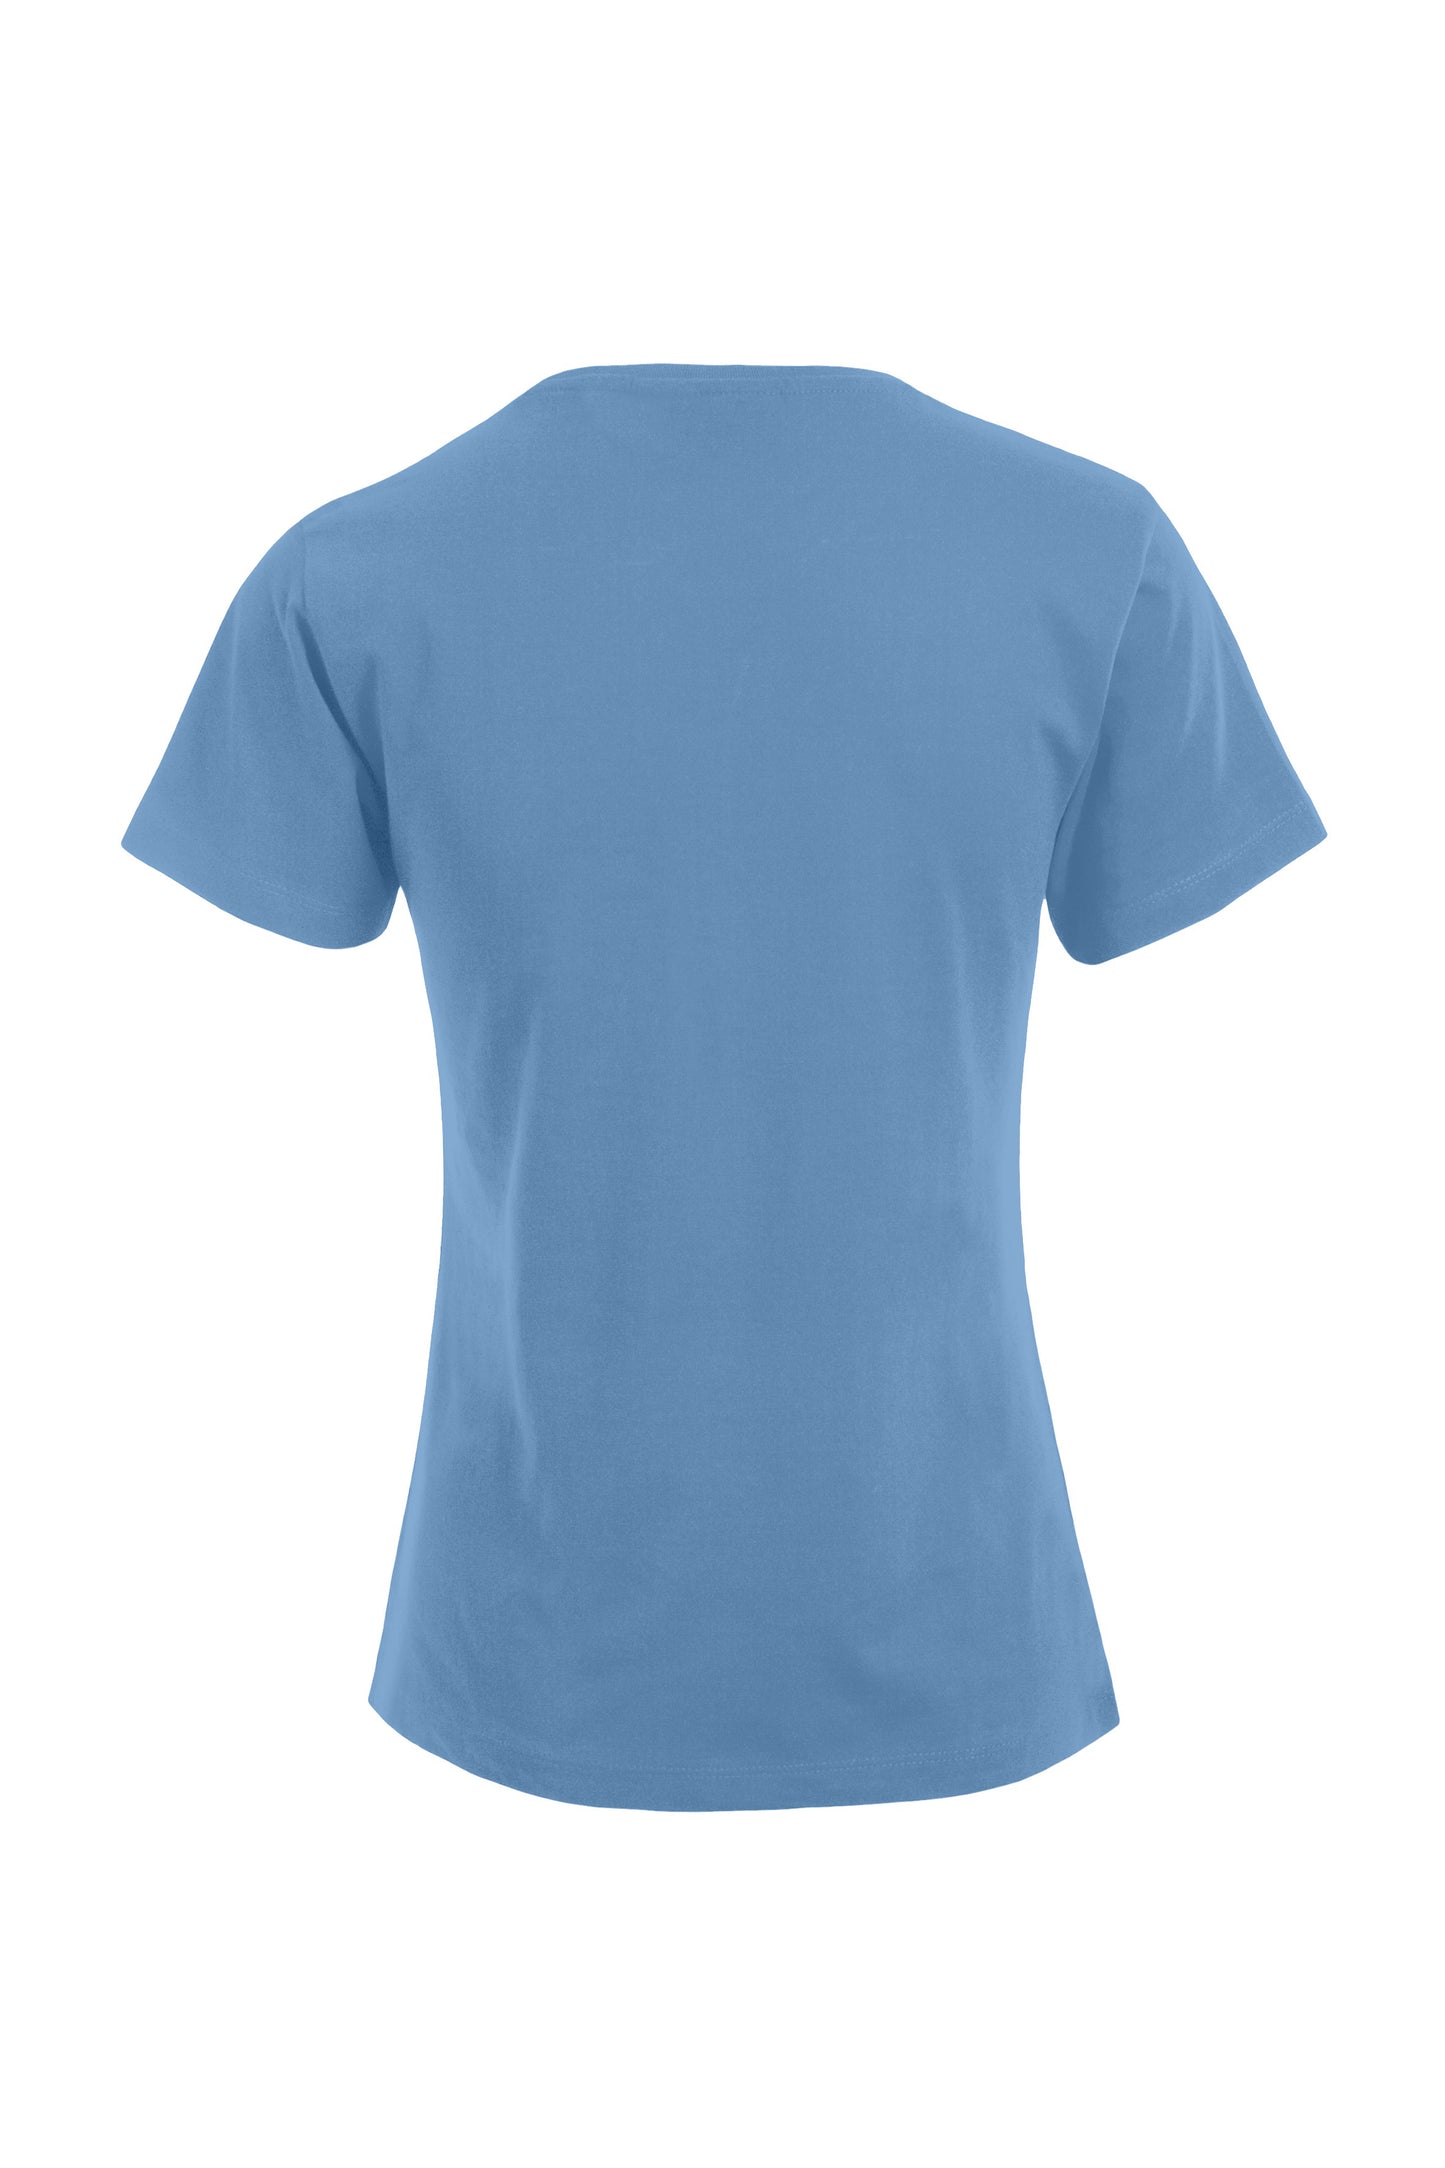 Personalisierbares Premium Damen T-Shirt - Blau